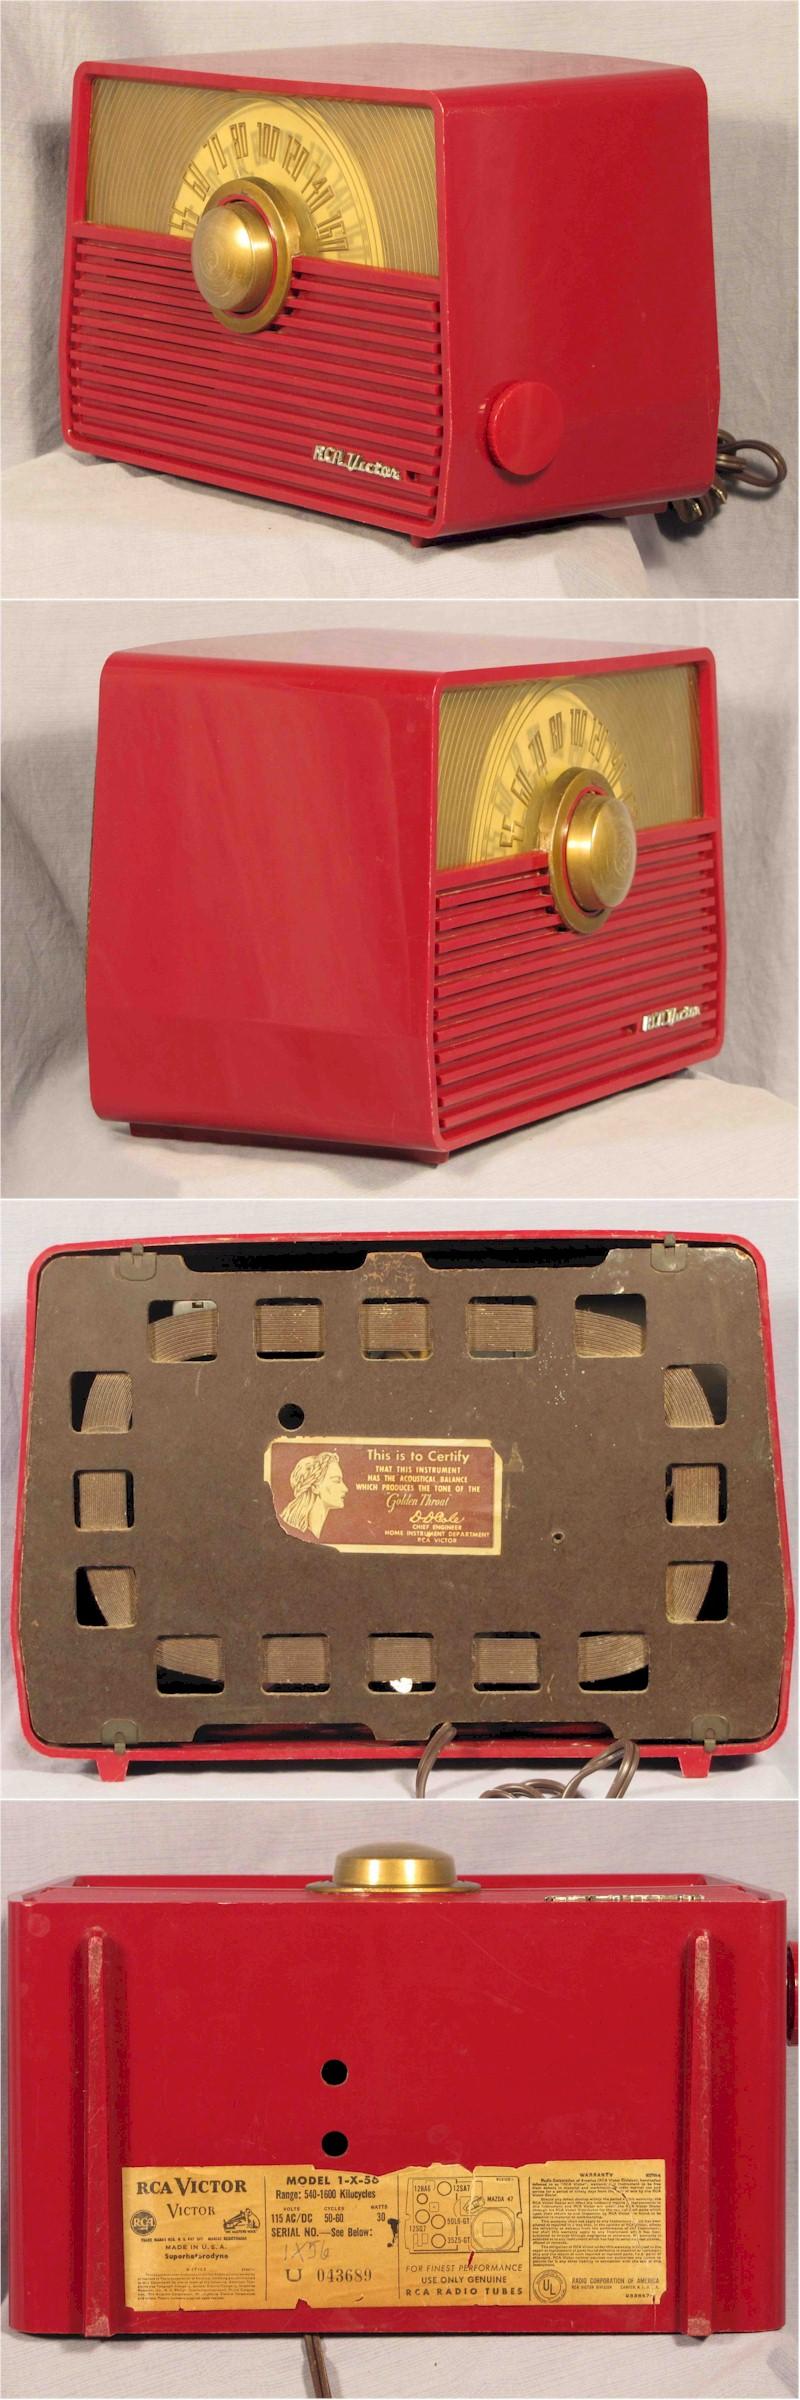 RCA Victor 1X56 (1952)